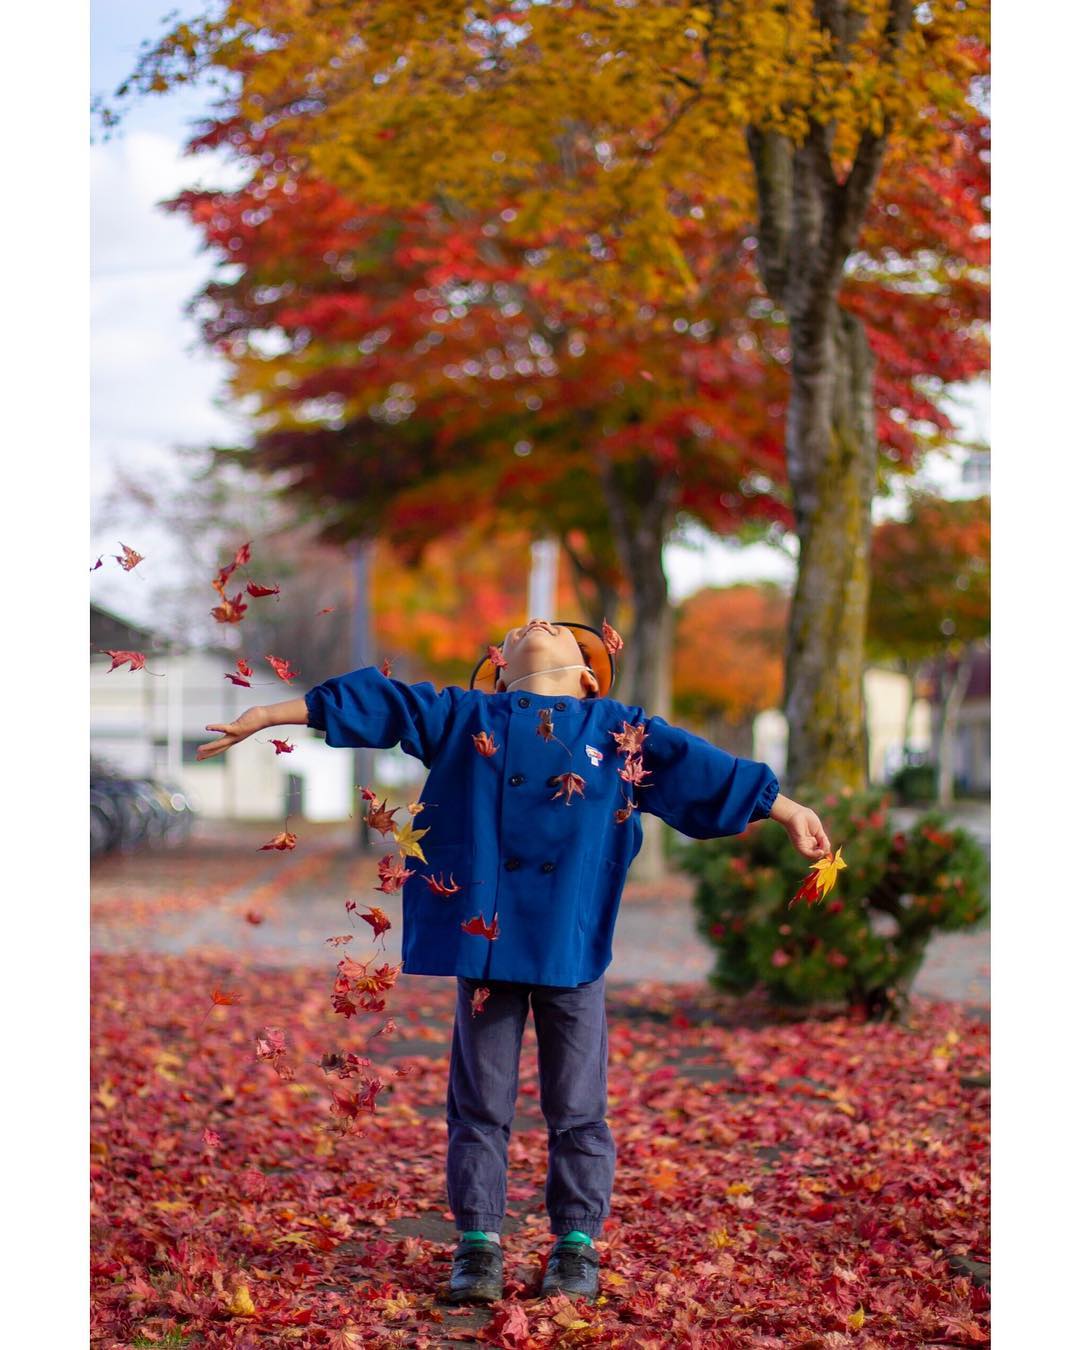 Boy enjoying autumn leaves